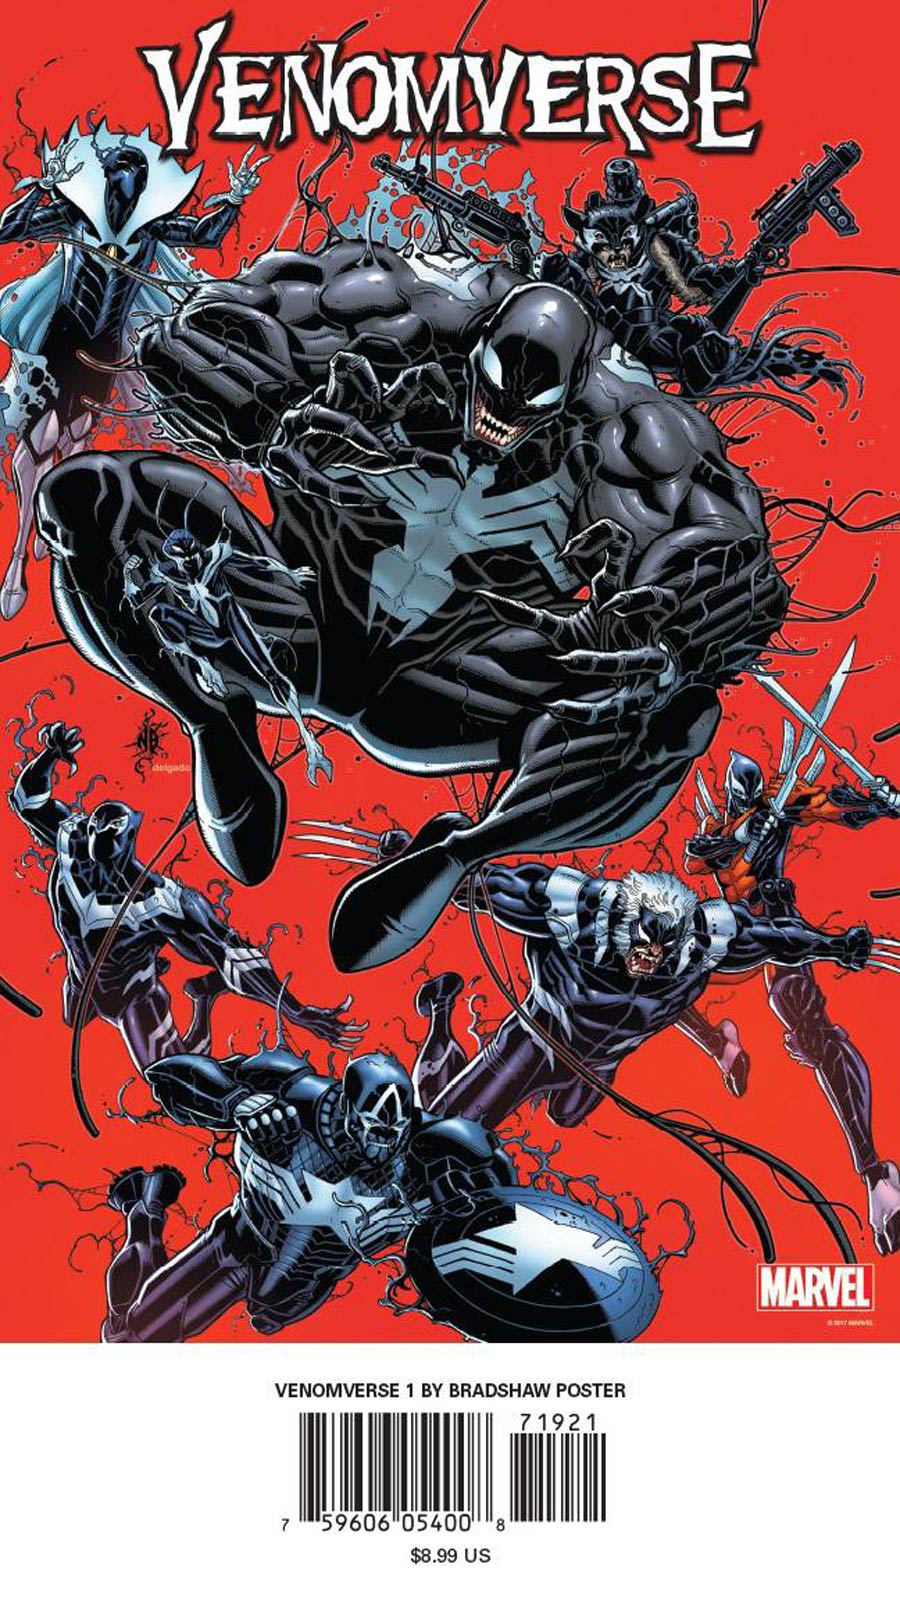 Venomverse #1 By Nick Bradshaw Poster